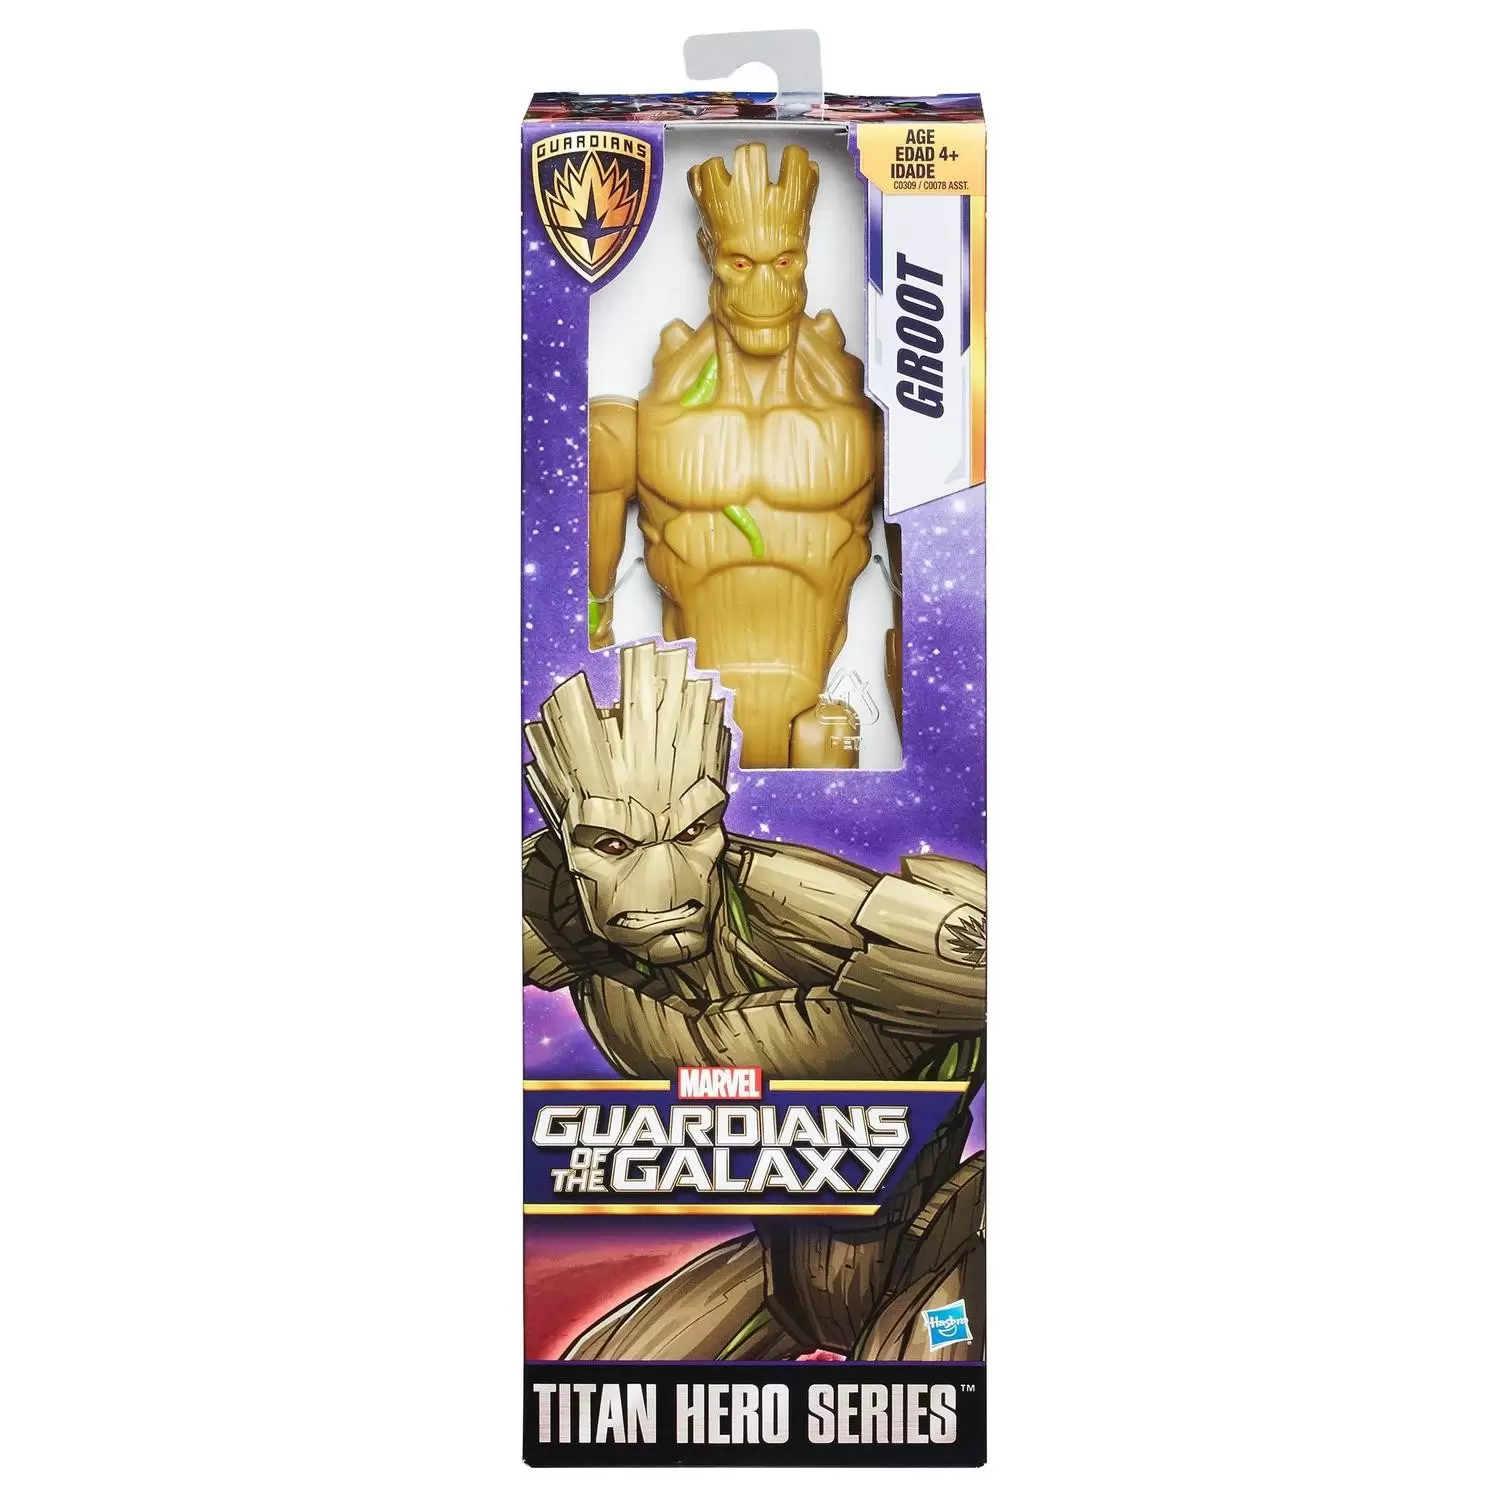 Titan Hero Series - Guardians of the Galaxy - Groot